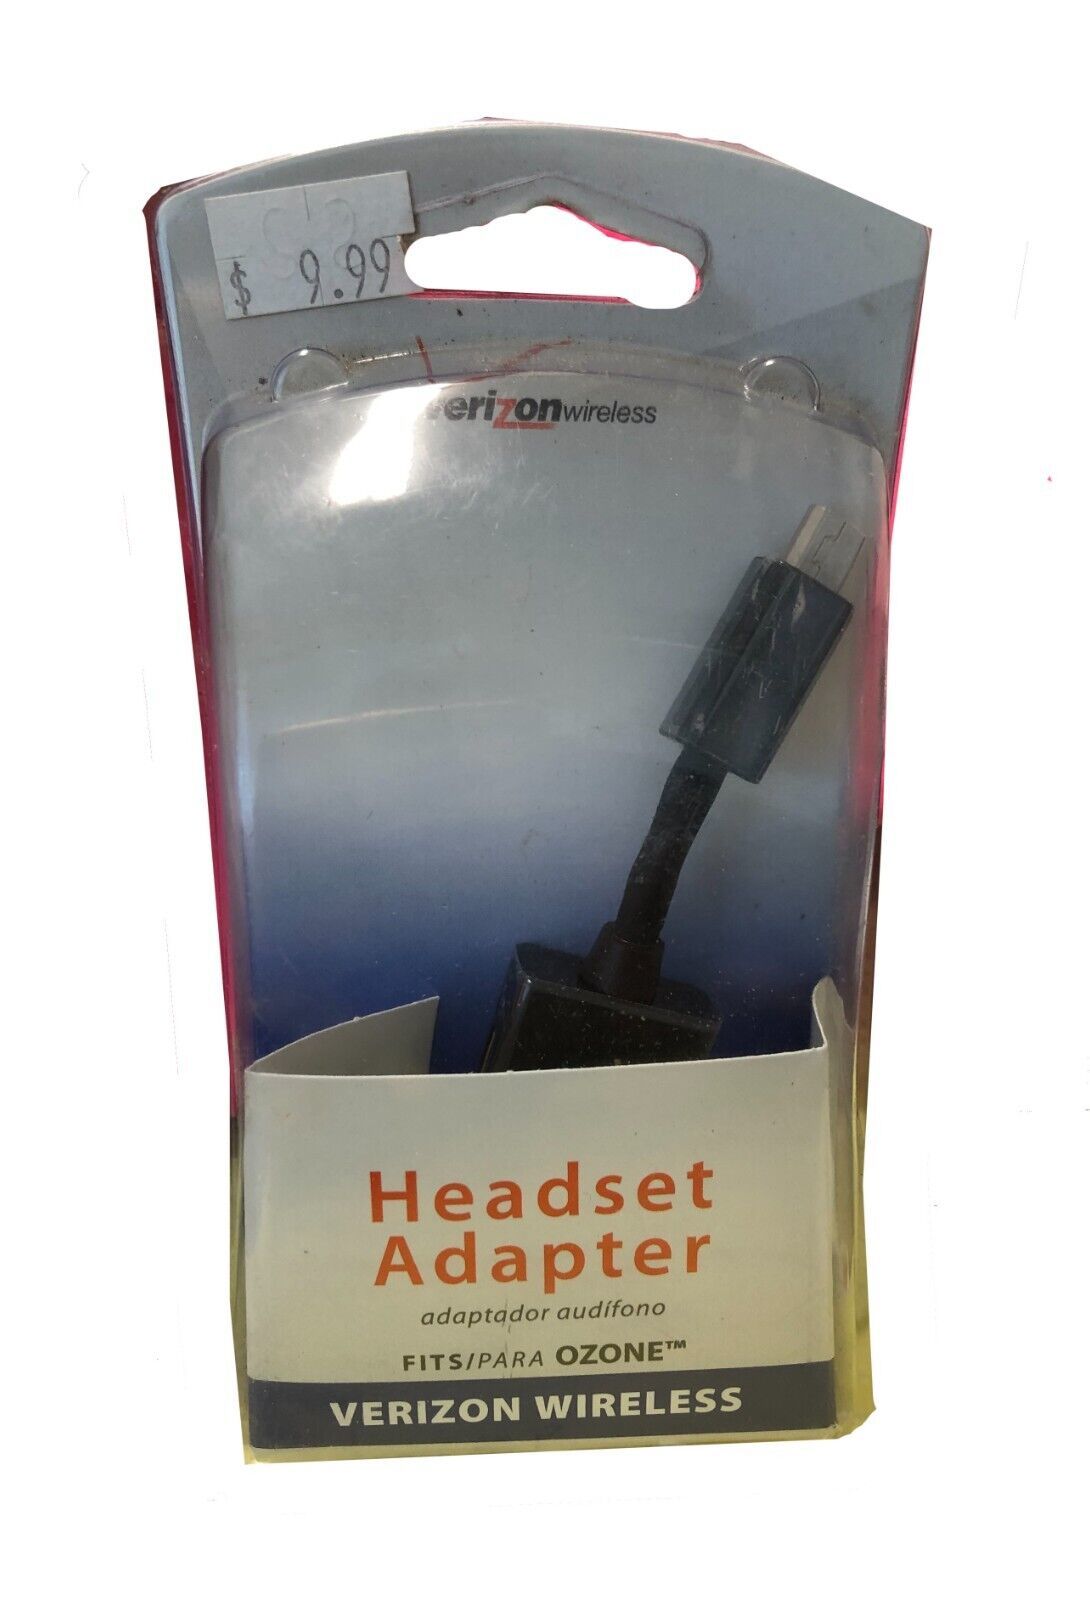 Headset Adapter for Verizon Wireless - $11.39